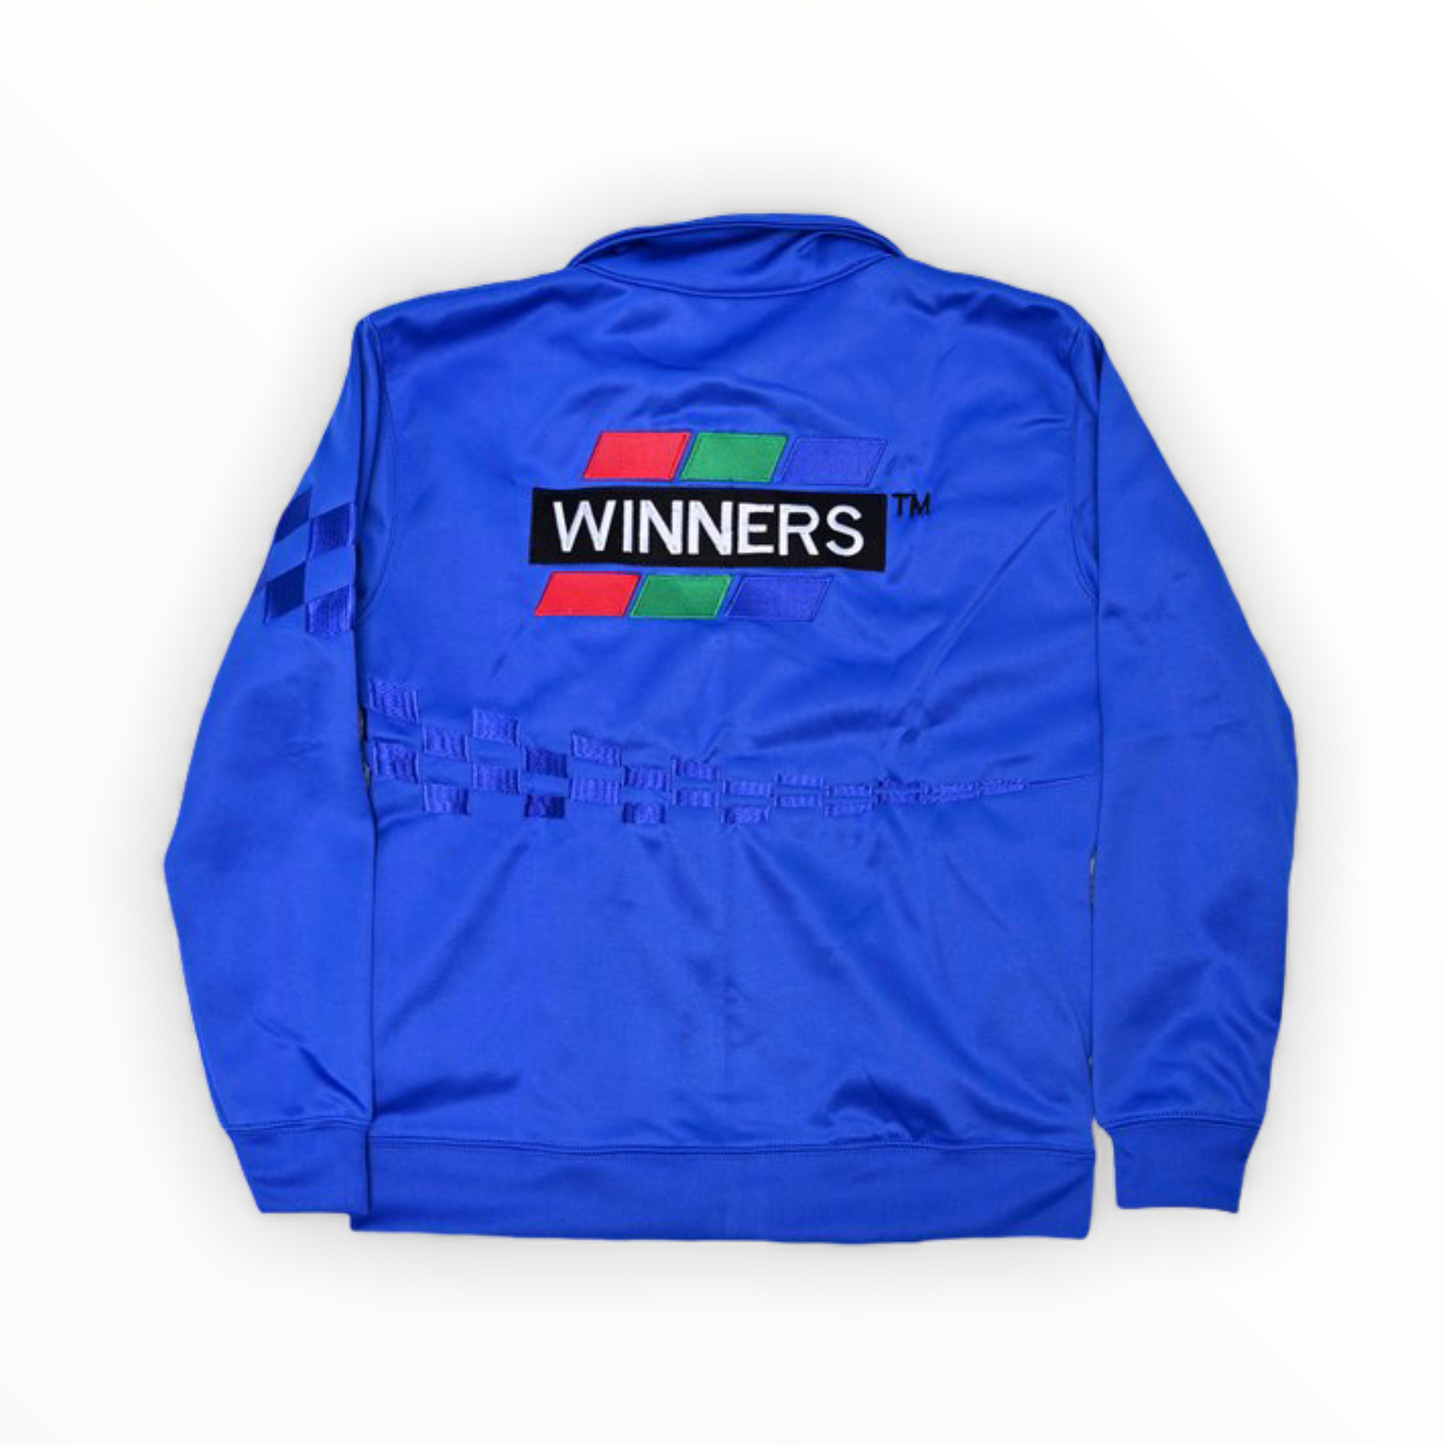 Winners Checkered Track Set Jacket - Royal Blue